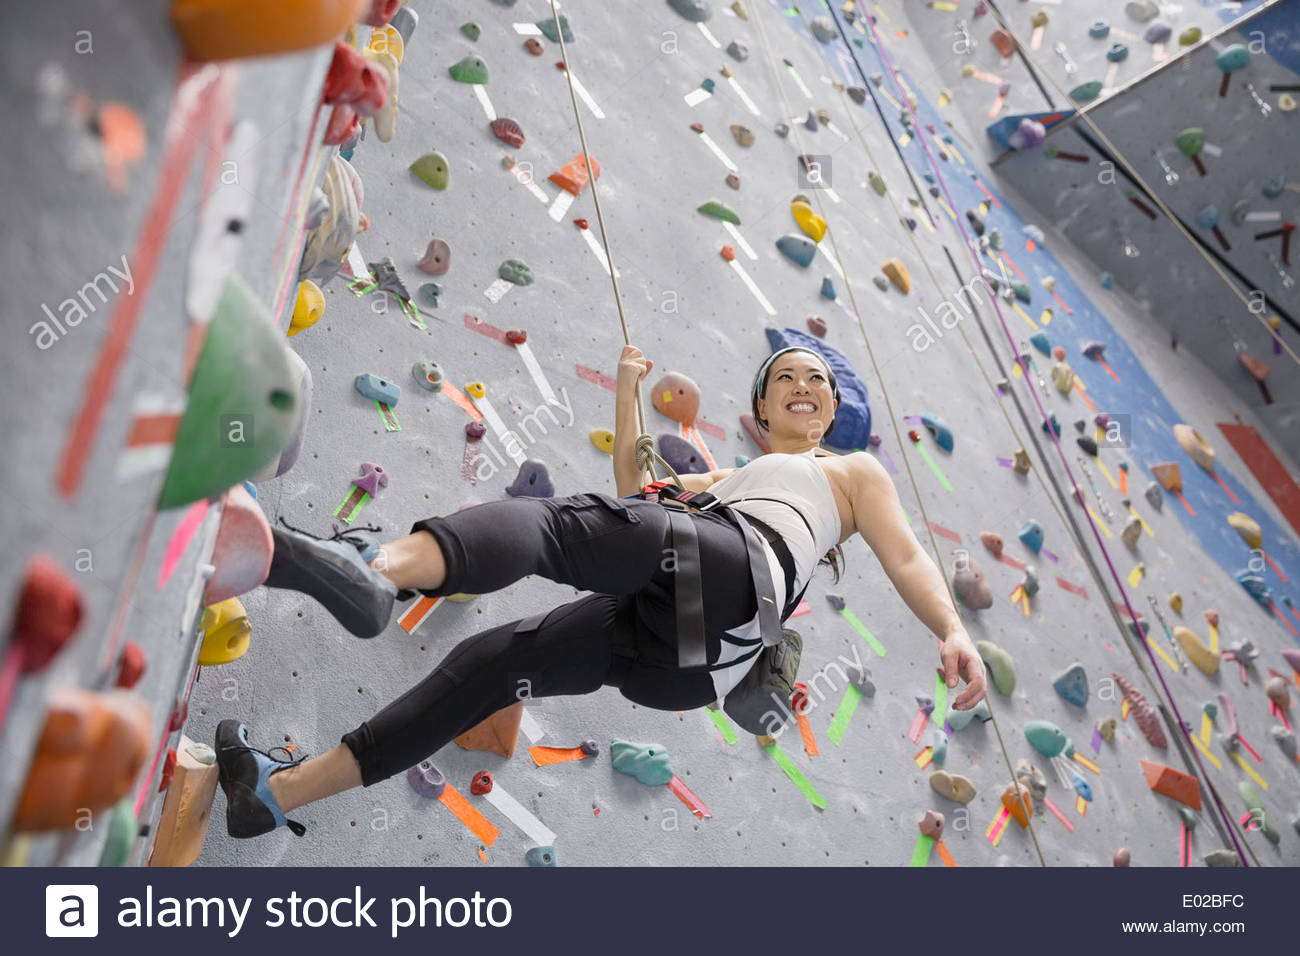 Smiling woman climbing indoor rock wall Stock Photo